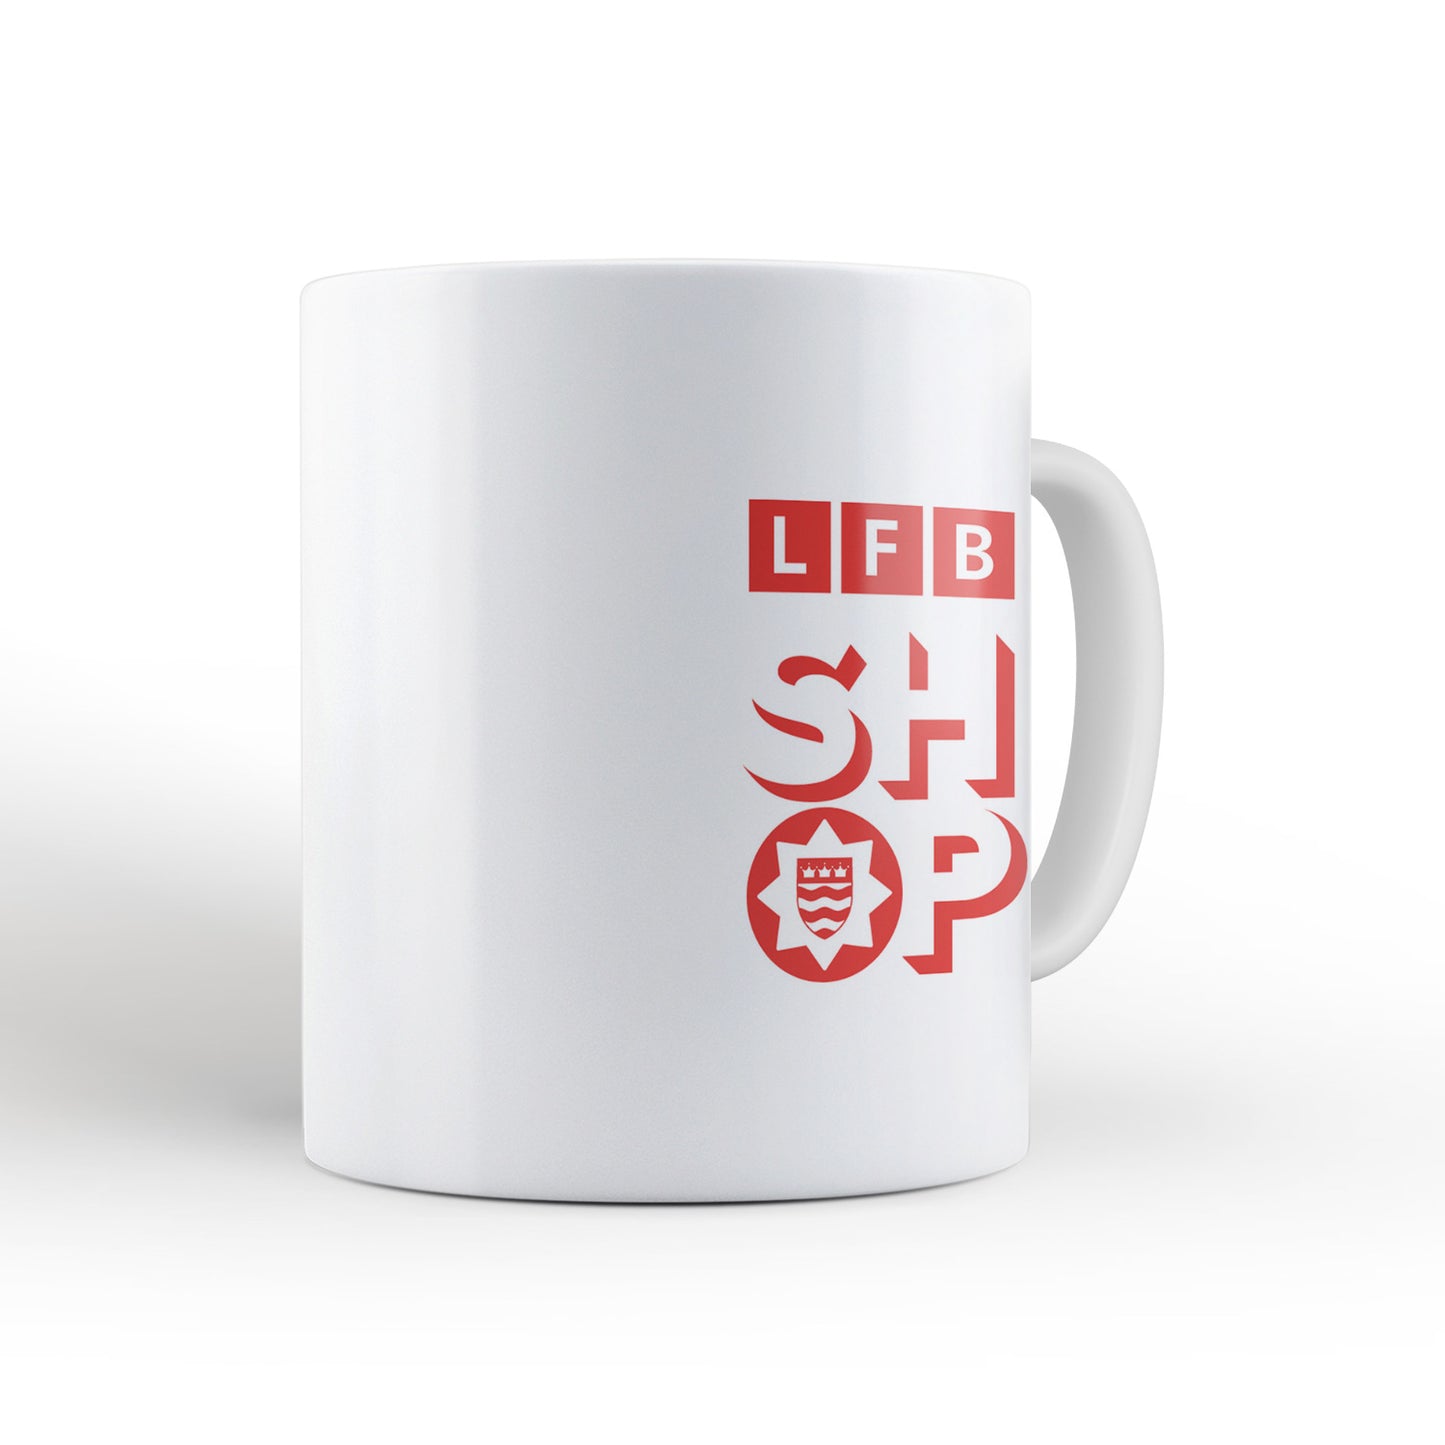 LFB Shop Mug